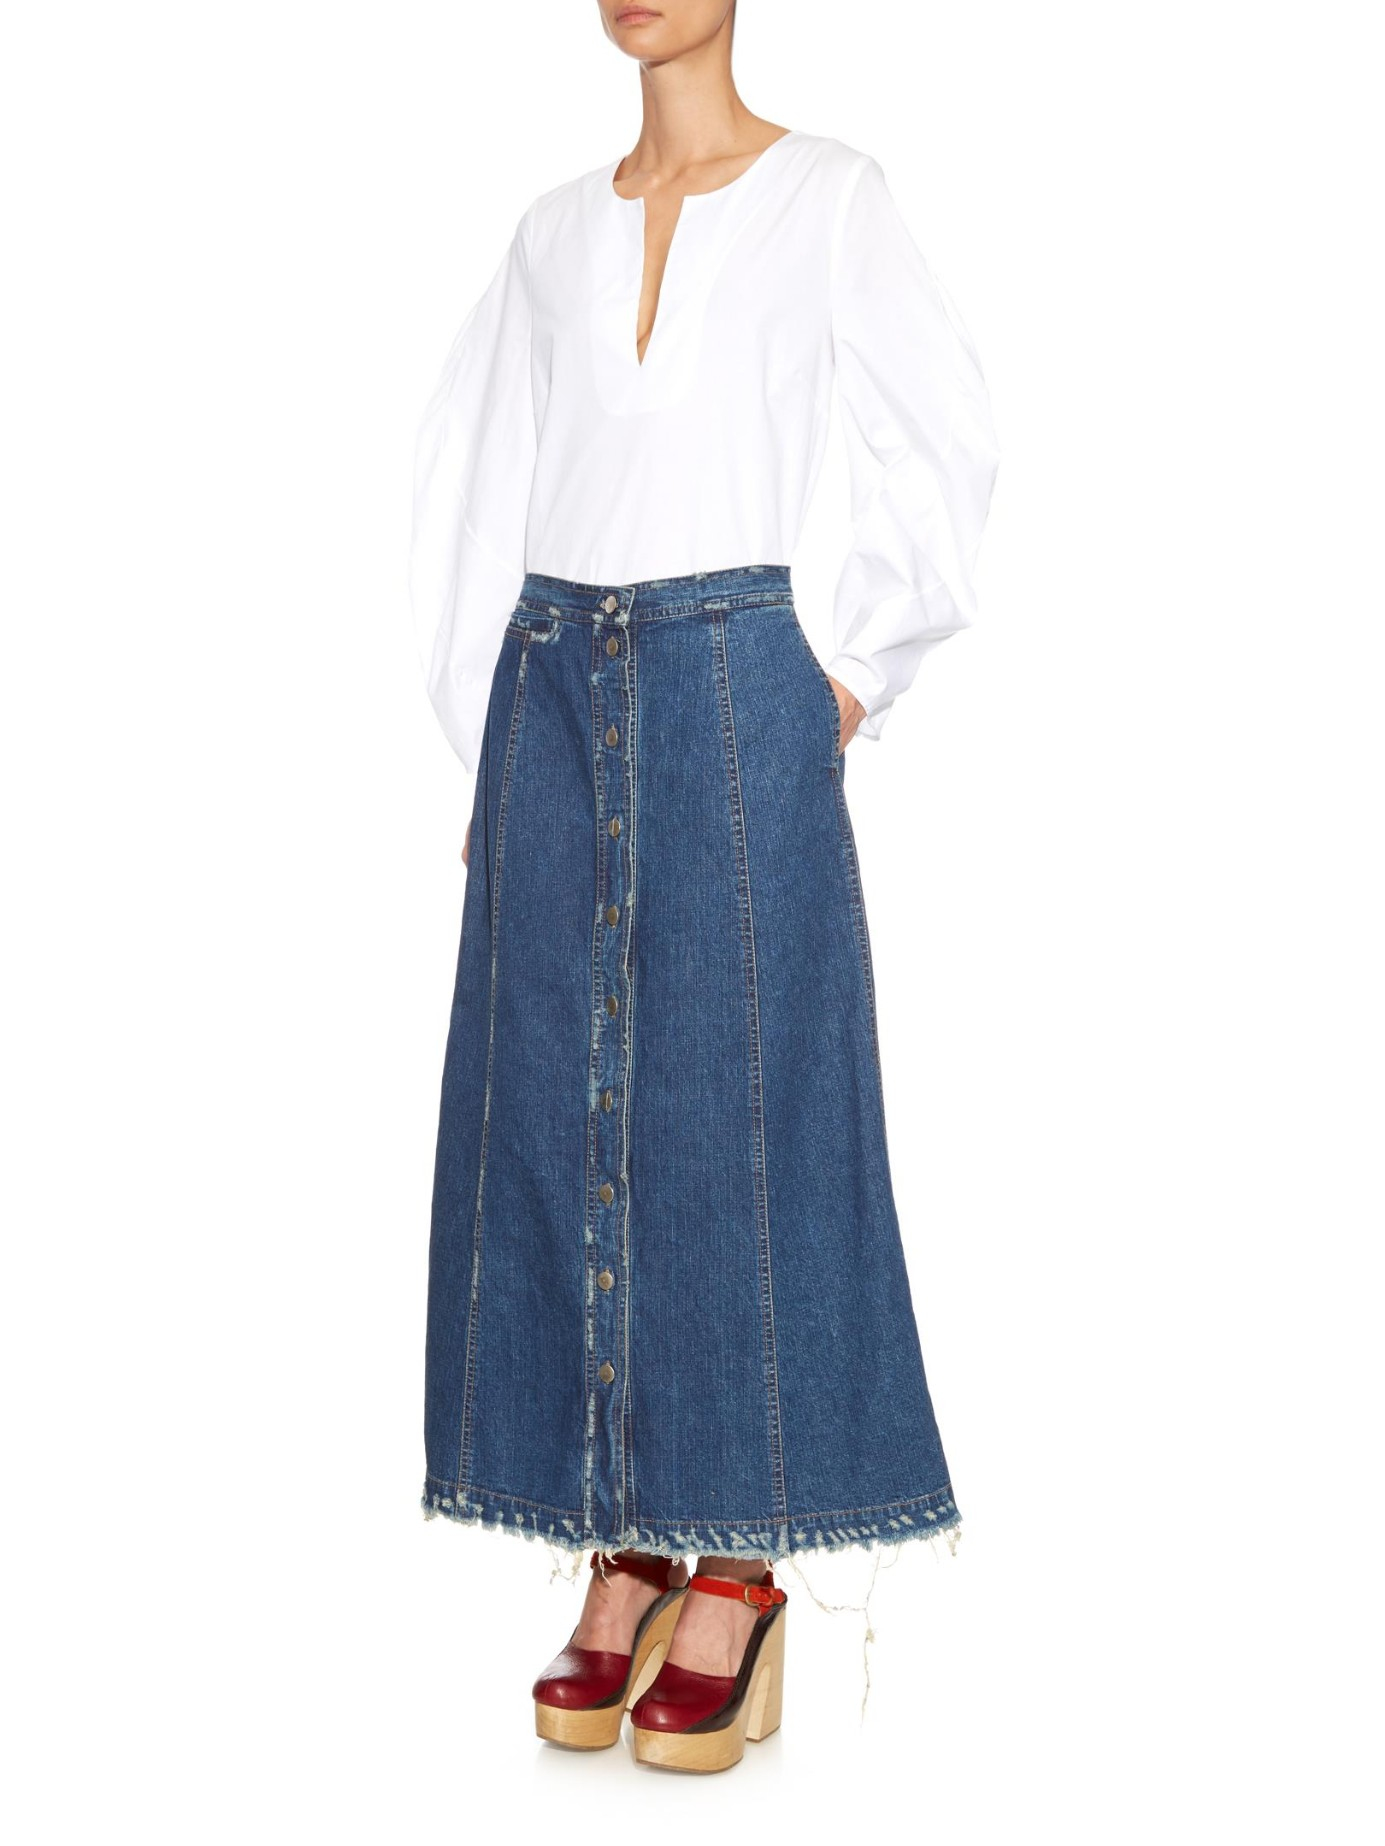 Lyst - Rachel Comey 'Gore' Denim Skirt in Blue